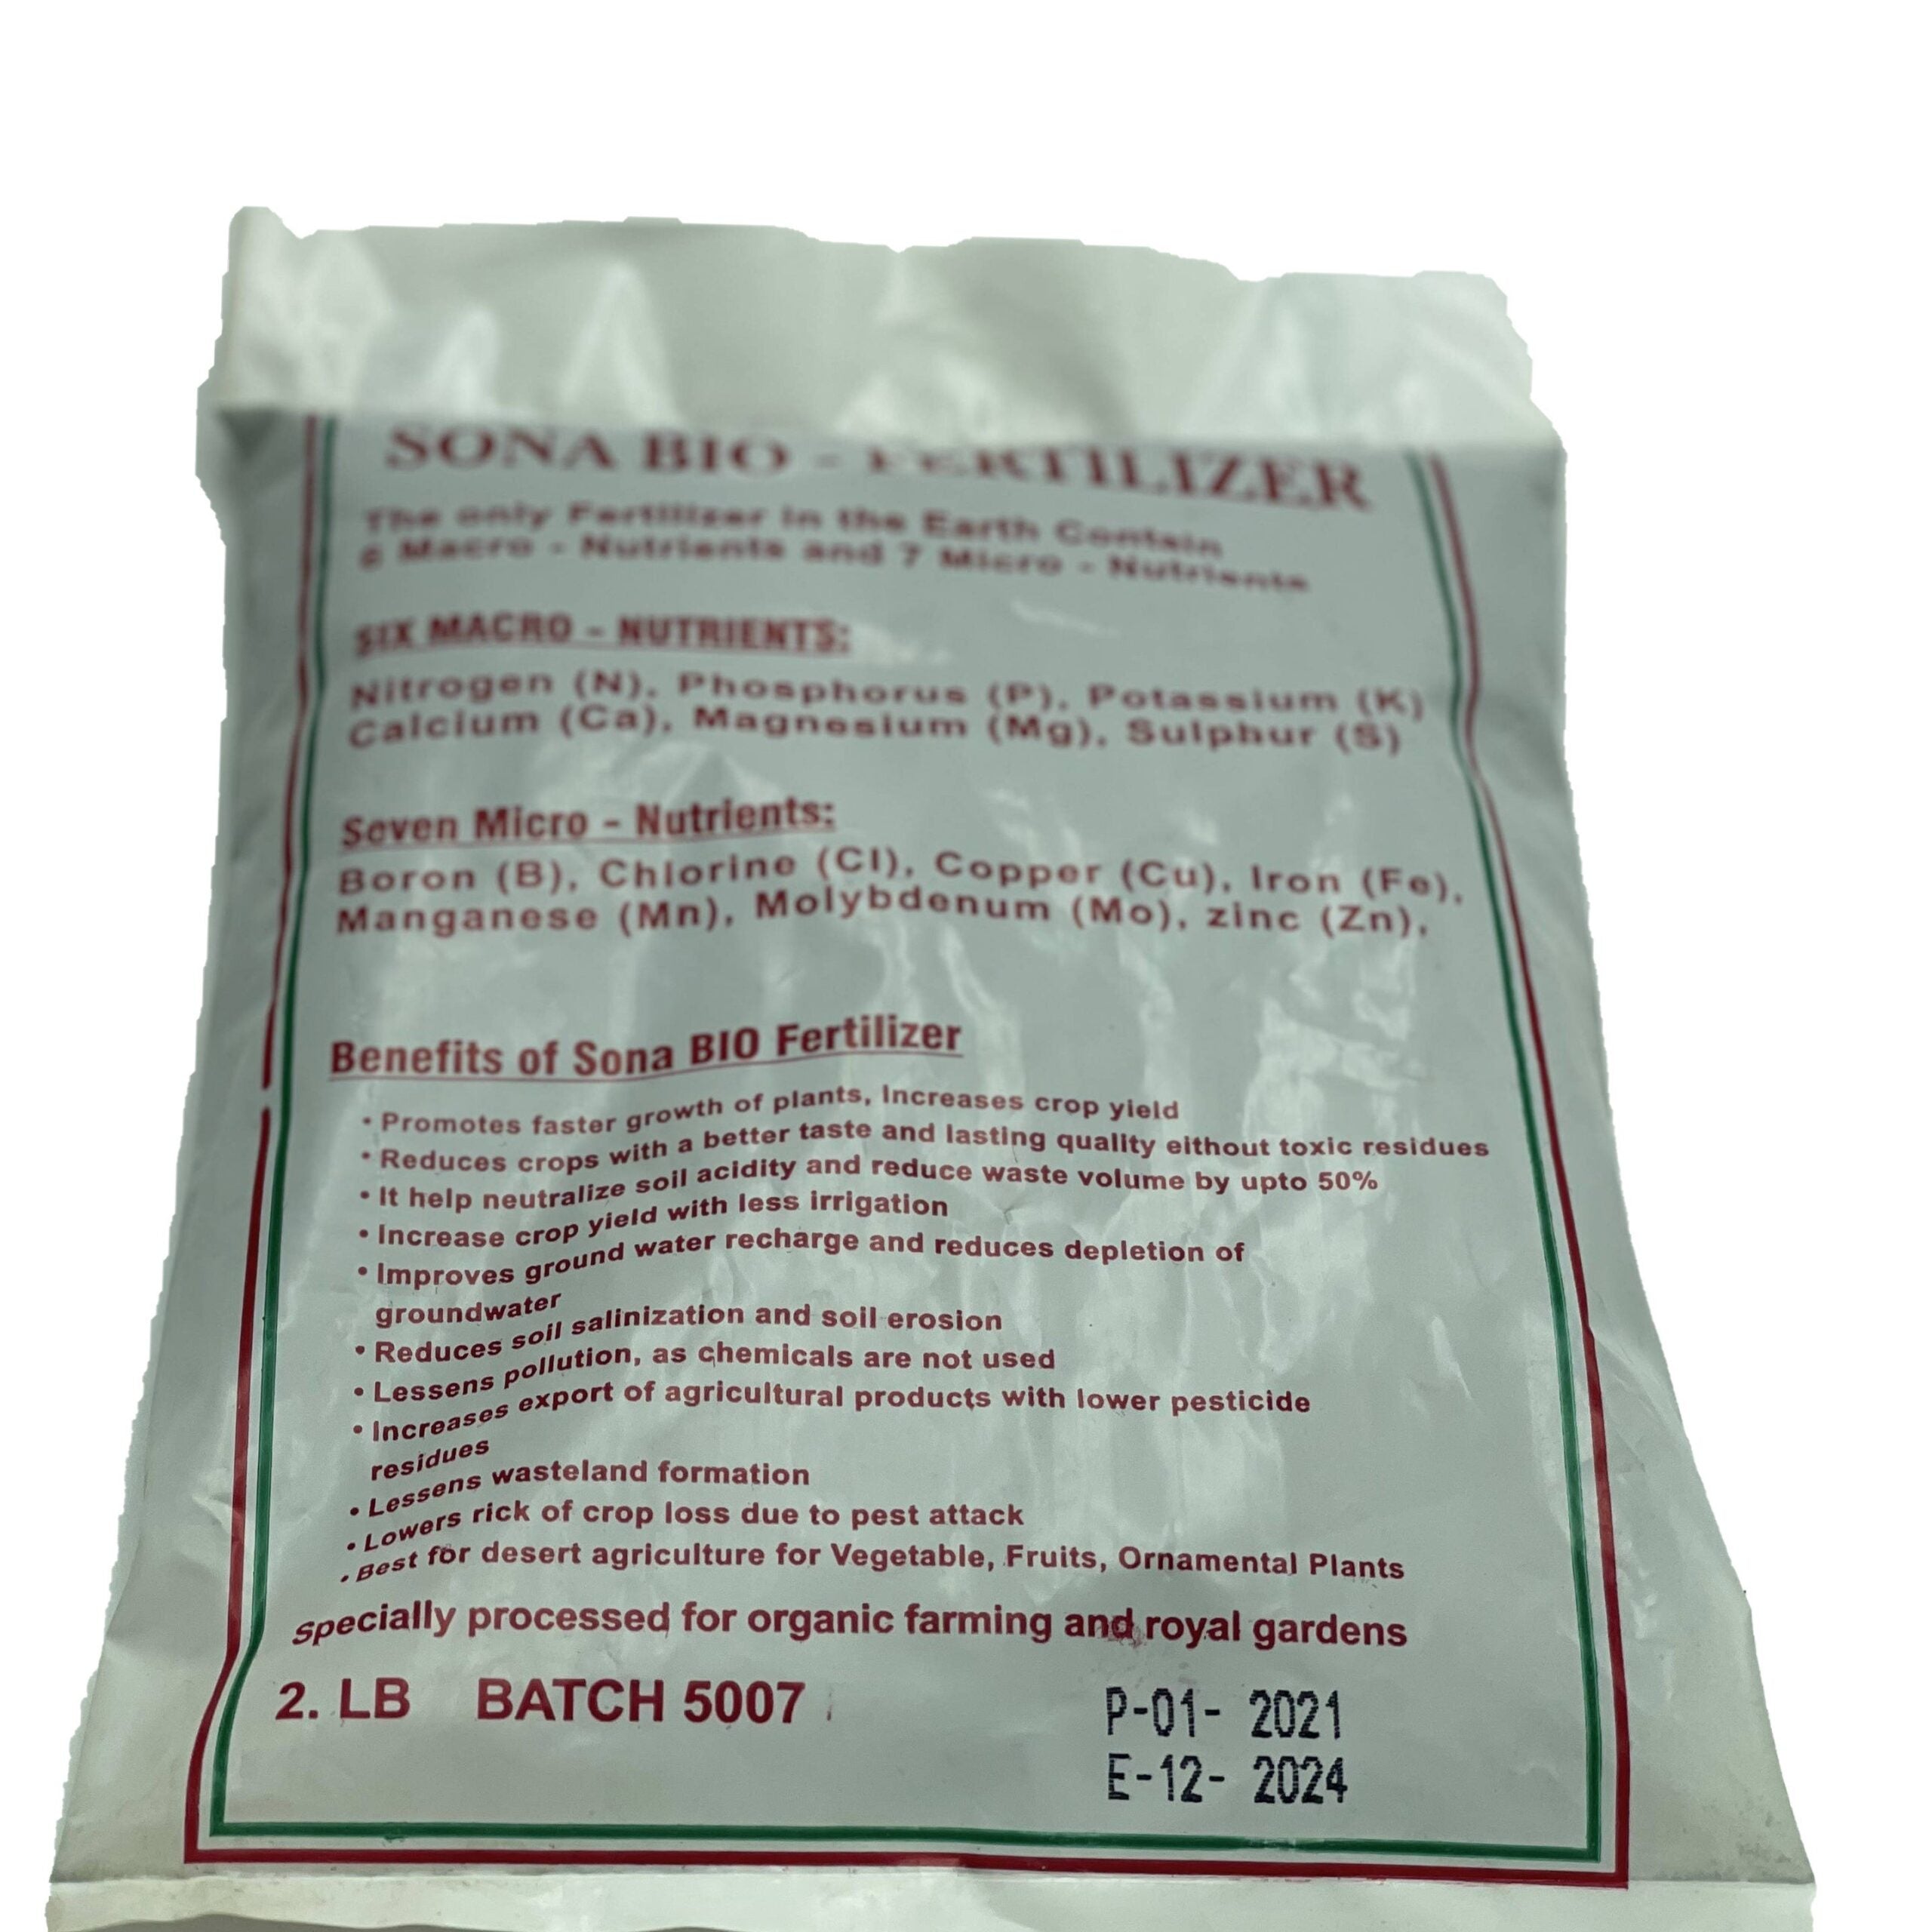 Shalimar Biotech Sona Bio-Fertilizer | 2lb